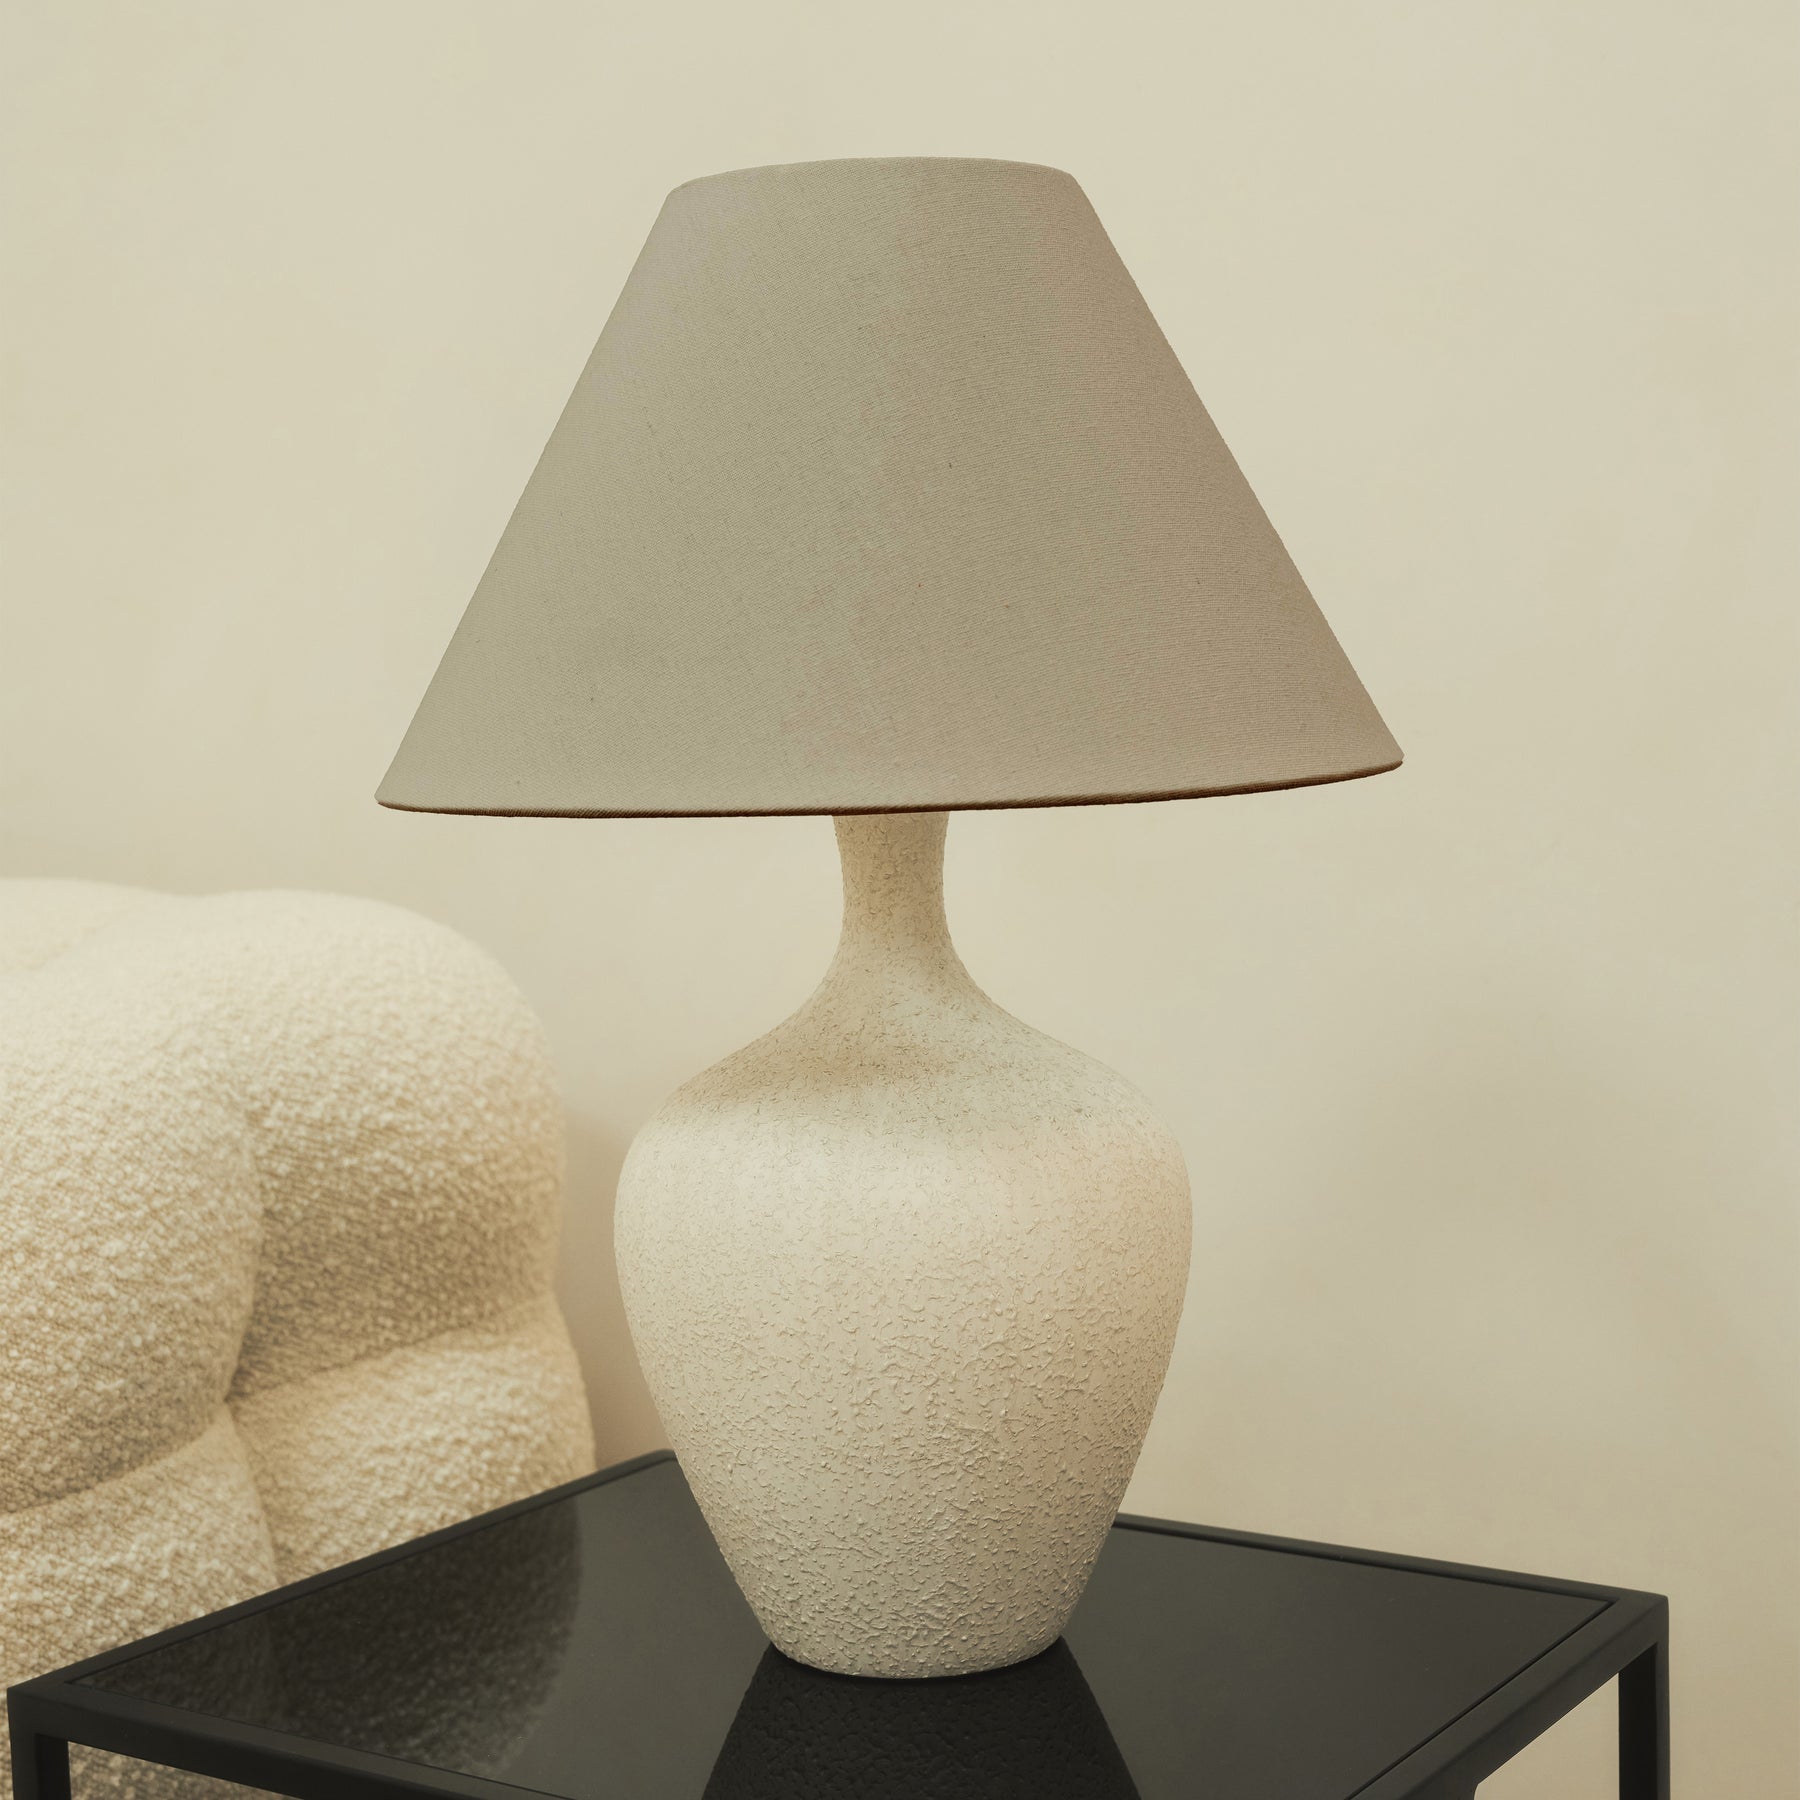 Elba - Textured Ceramic Based Table Lamp Beige Shade